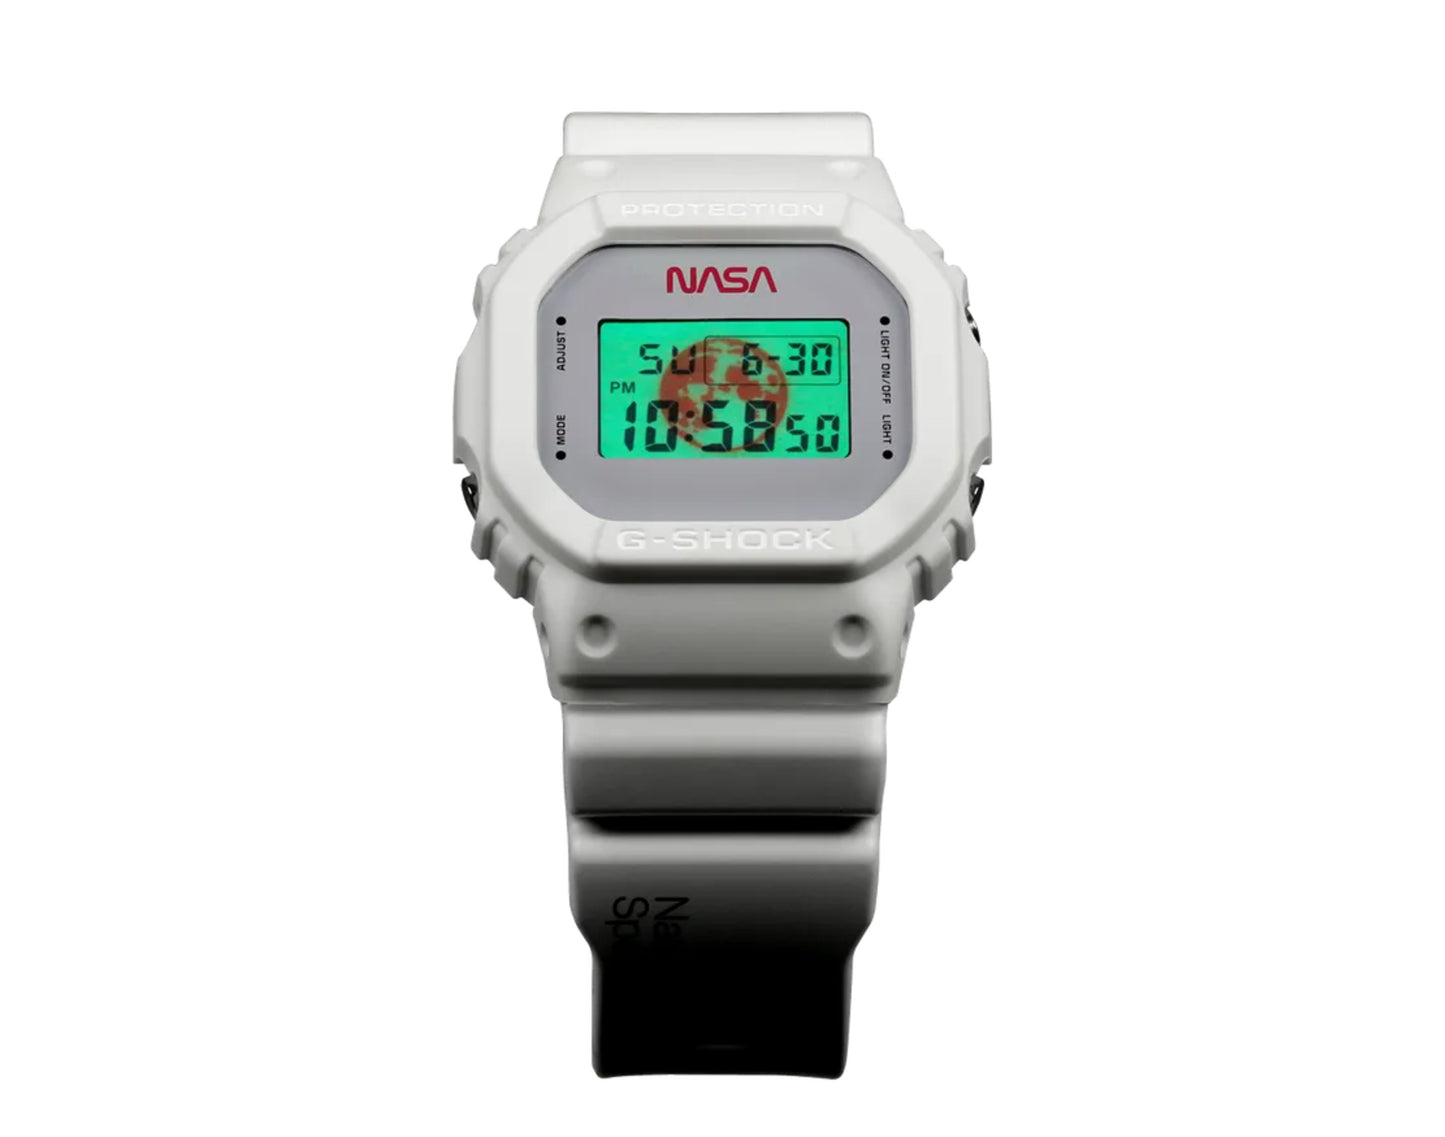 Casio G-Shock x NASA DW5600 Digital Watch